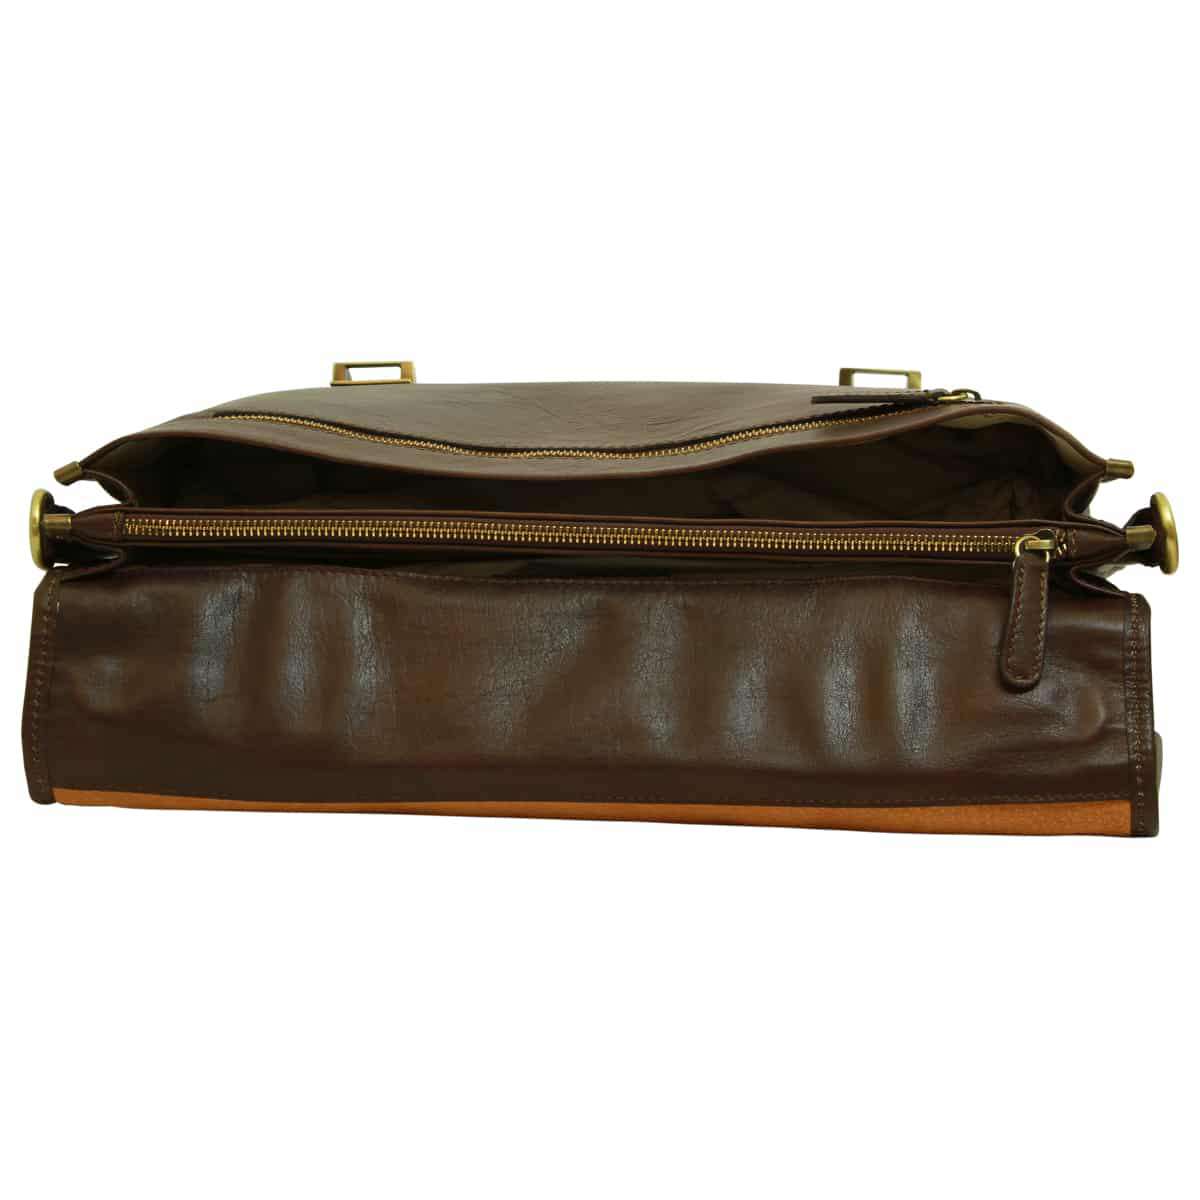 Soft Calfskin Leather Briefcase with shoulder strap - Dark Brown | 030991TM US | Old Angler Firenze